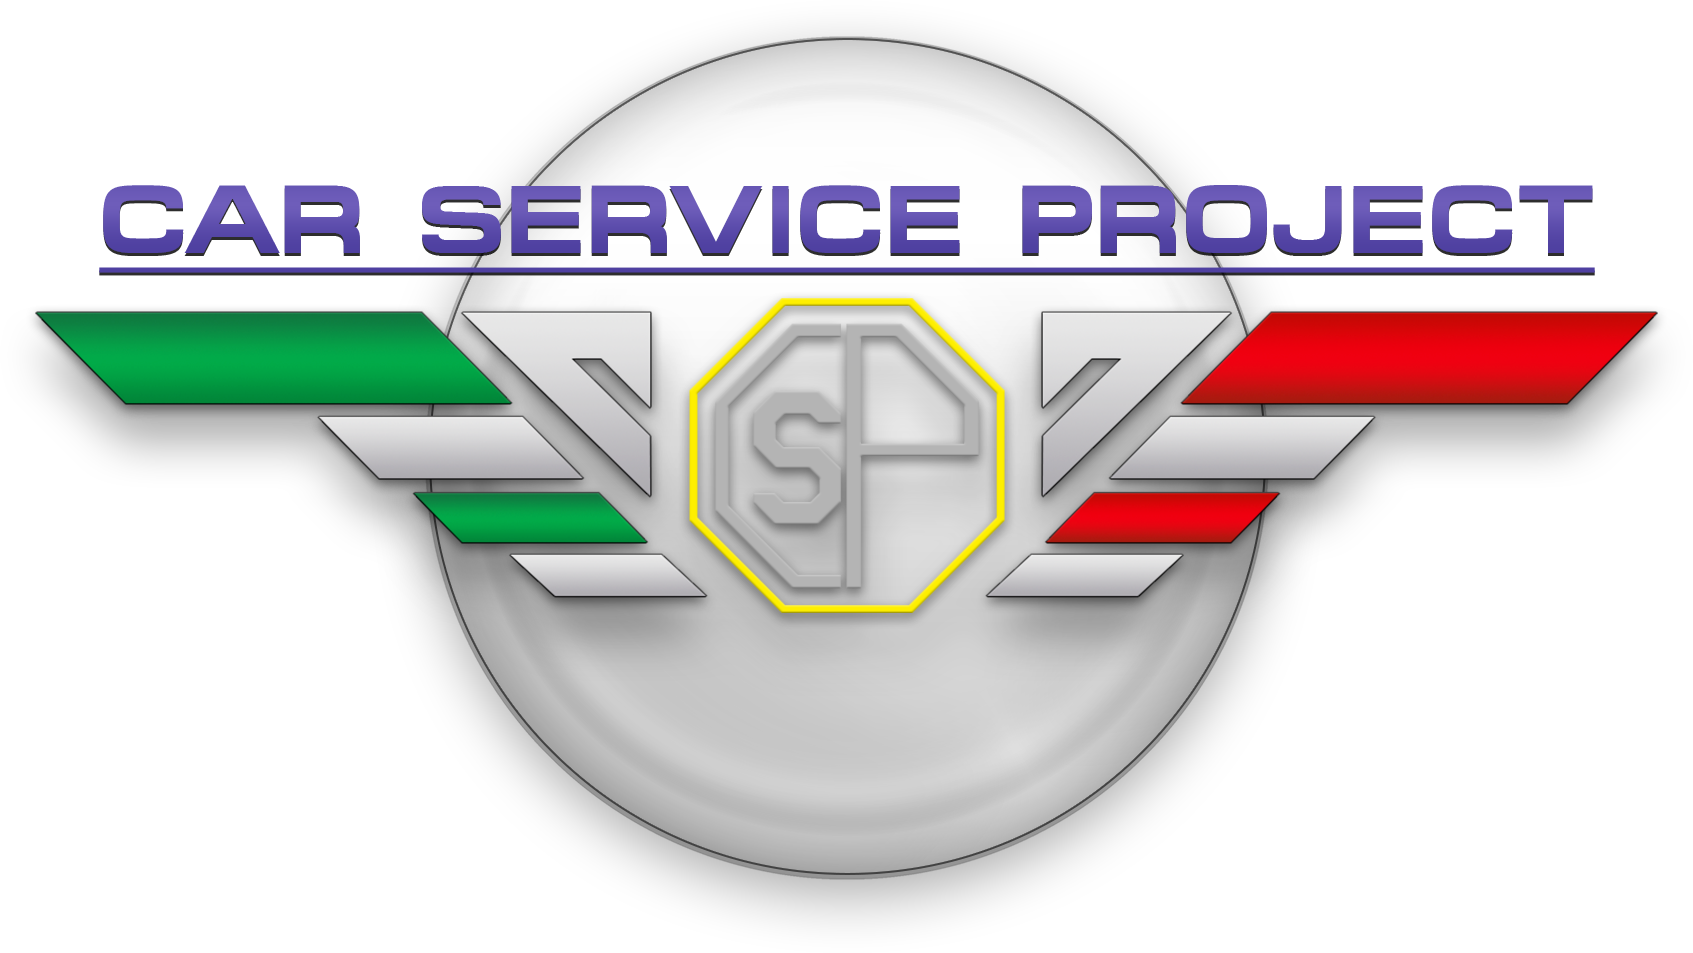 Car Service Project